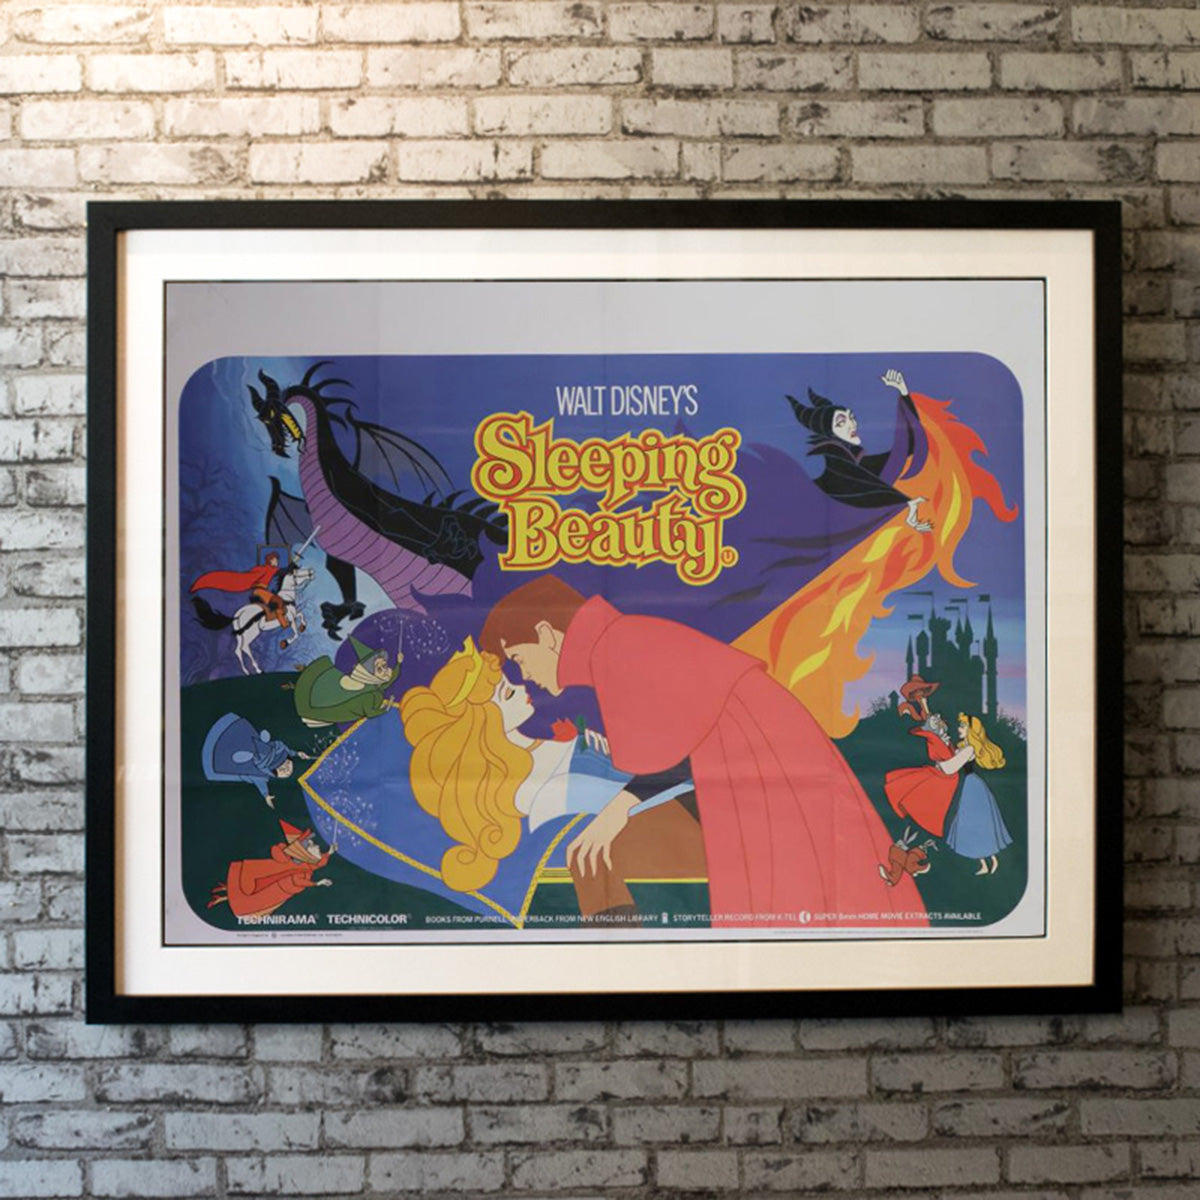 Original Movie Poster of Sleeping Beauty (1974R)